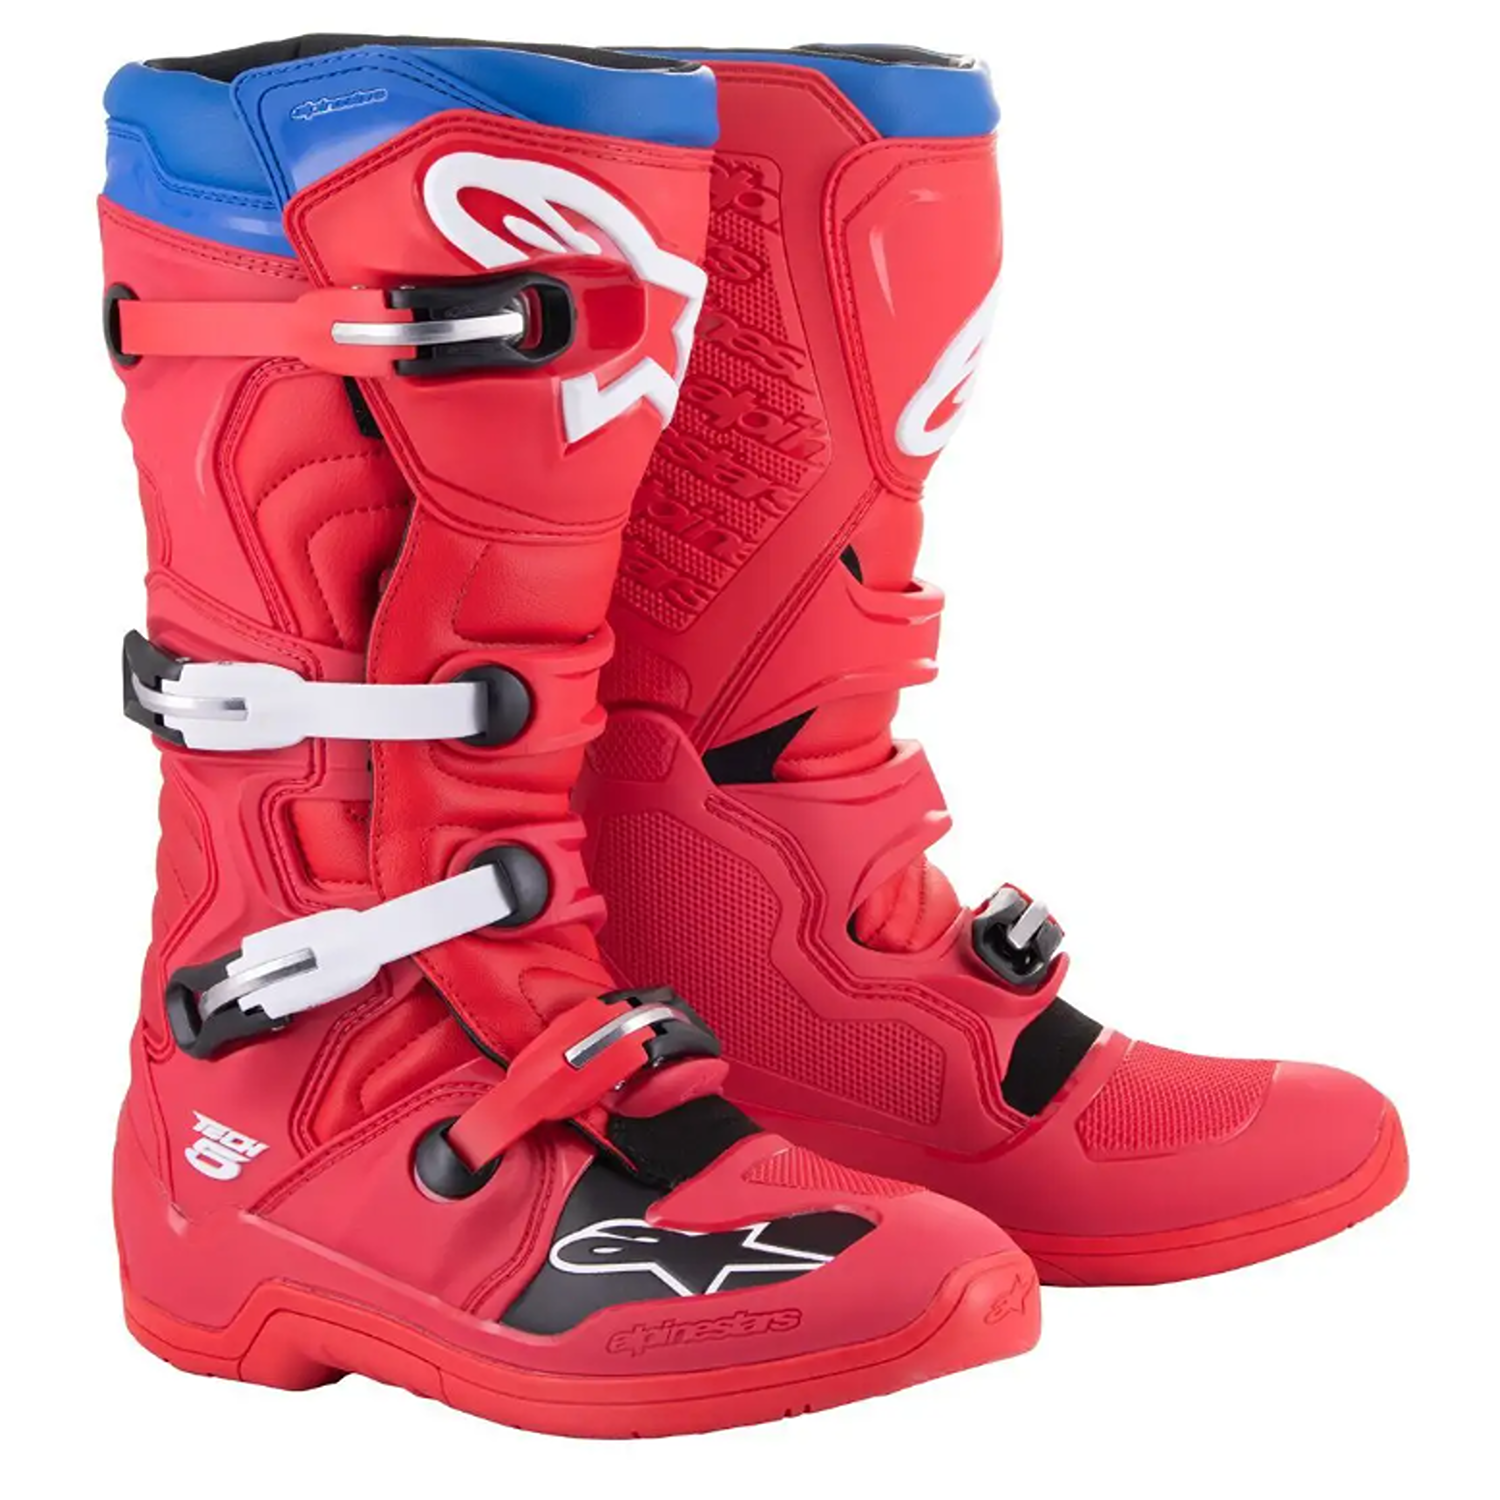 Image of Alpinestars Tech 5 Boots Bright Red Dark Red Blue Size US 16 EN